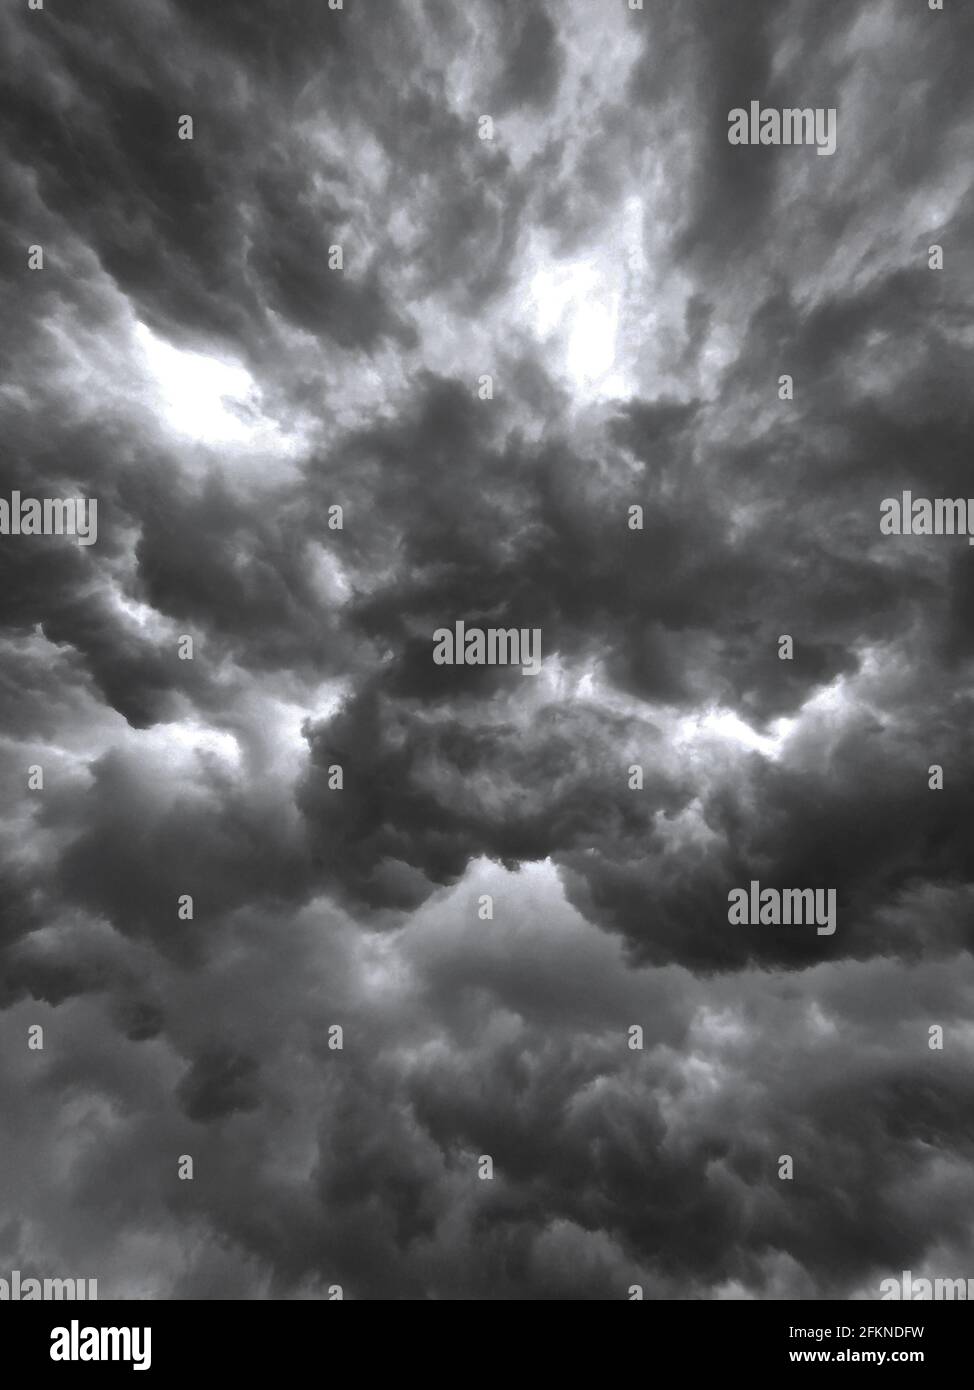 Temporale nubi scure cielo sfondo. Bakdrop torbido. Texture naturale del cielo. Atmosfera nuvolosa piovosa Foto Stock